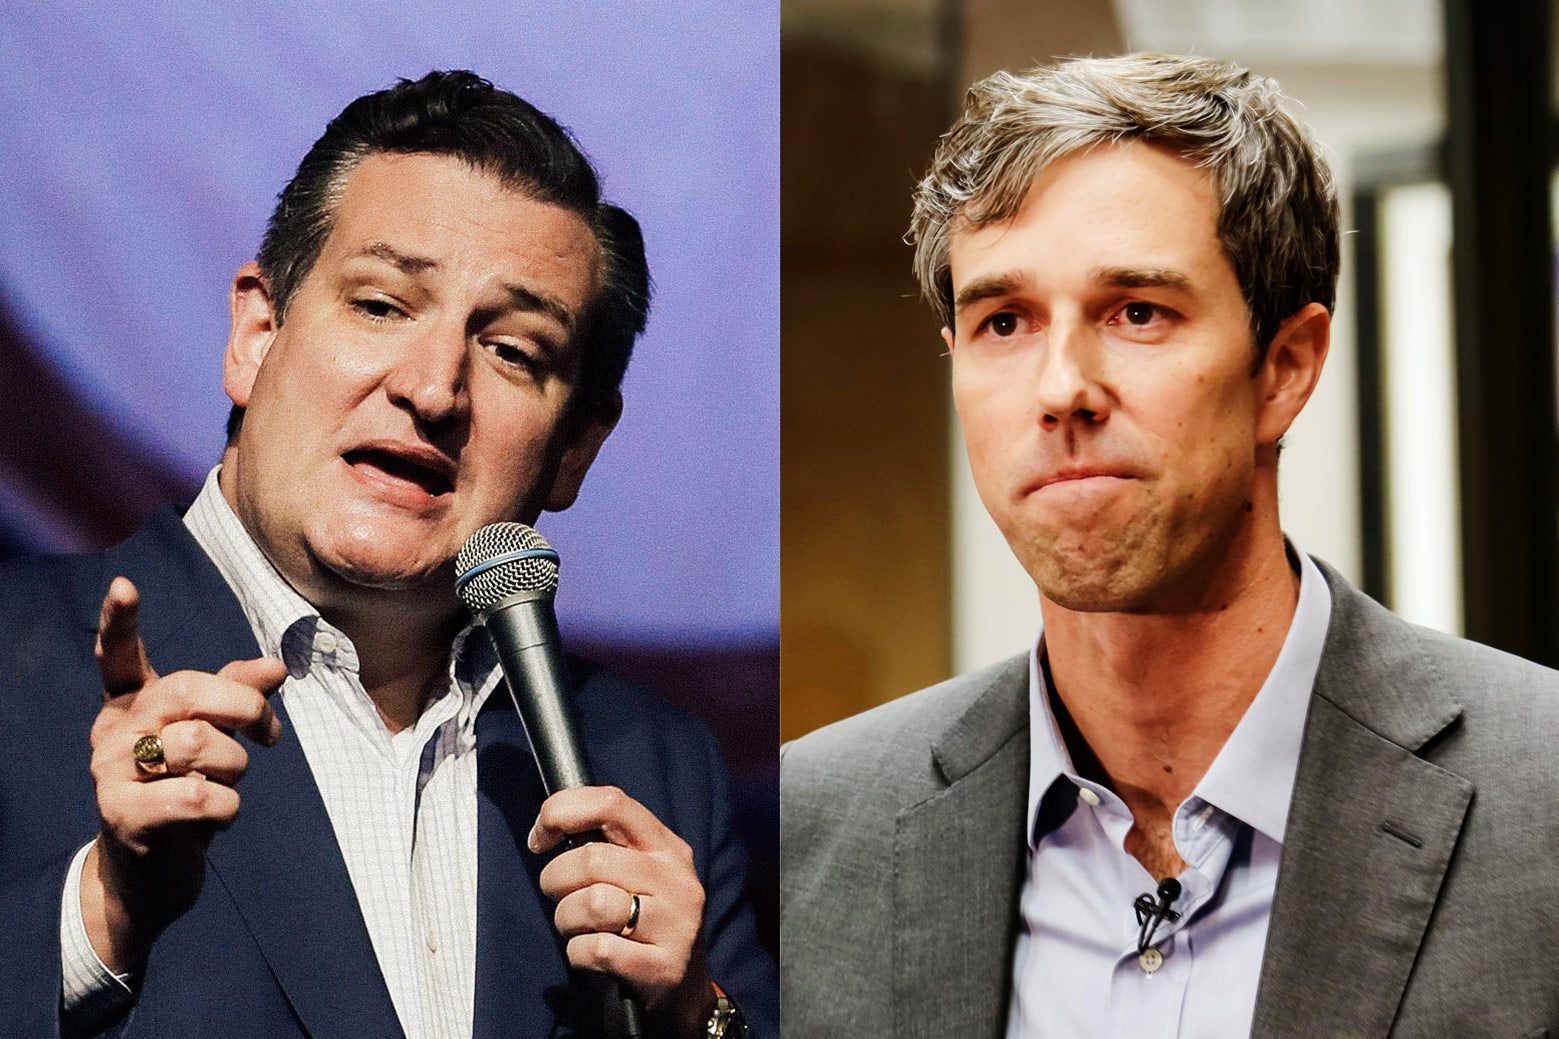 Side by side: Texas Sen. Ted Cruz and U.S. Representative Beto O'Rourke of Texas.